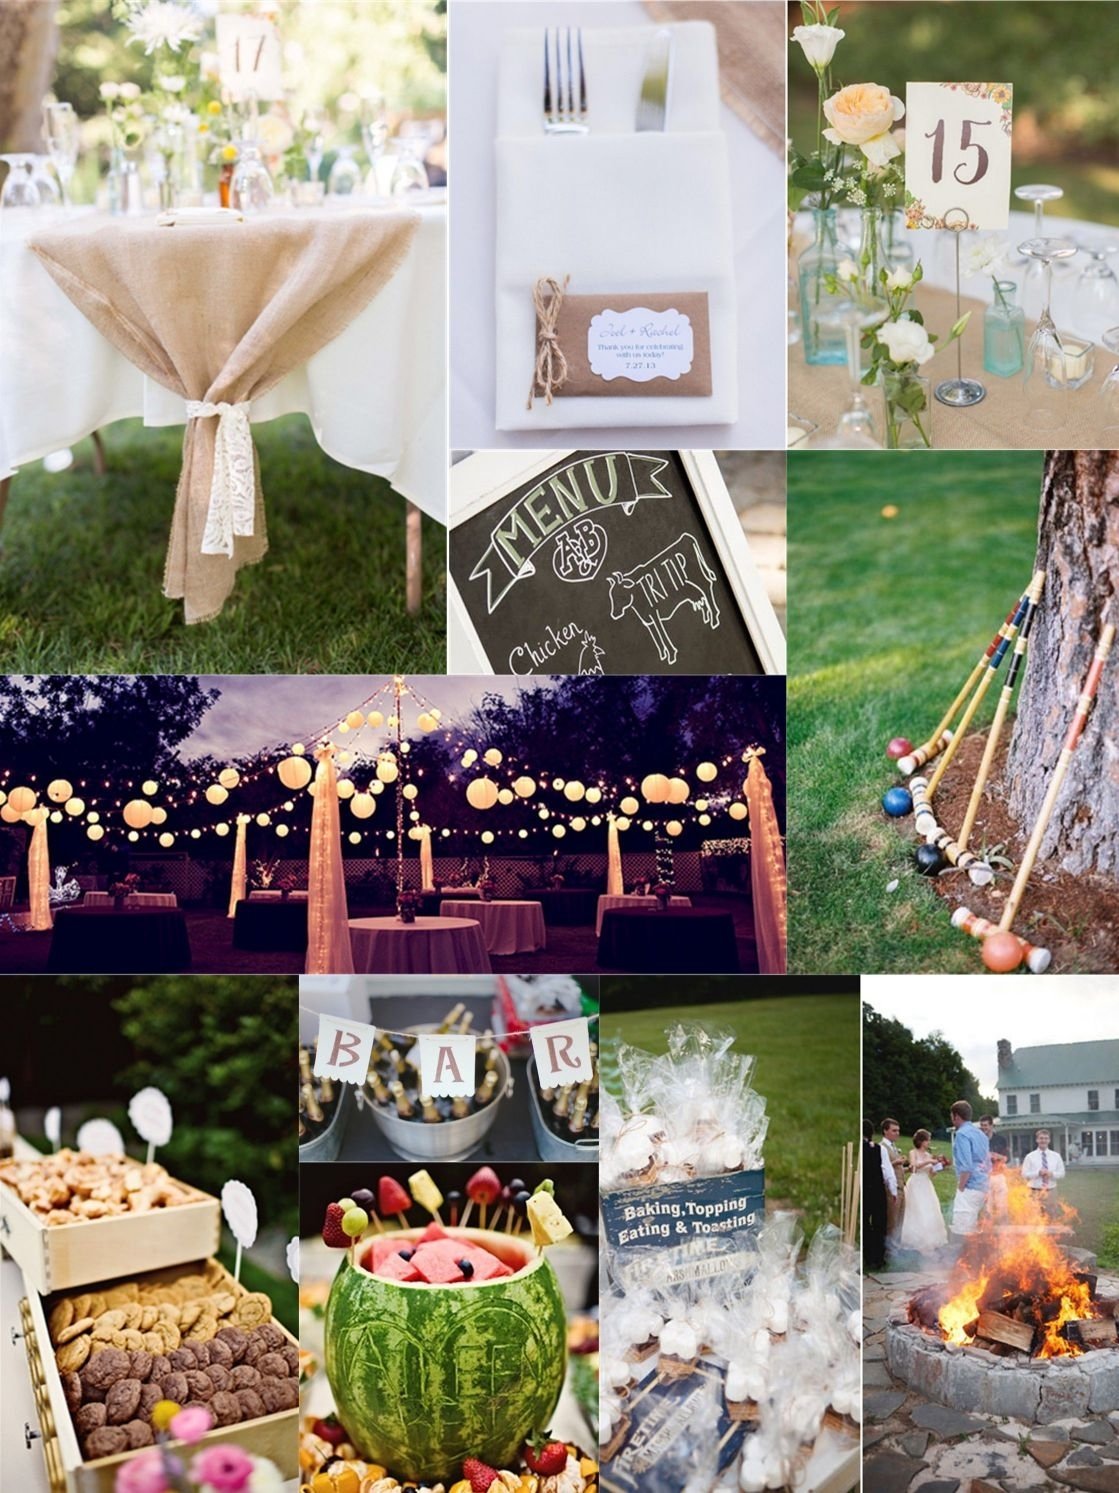 10 Cute Backyard Wedding Decoration Ideas On A Budget incredible wedding ideas on a budget backyard pic of decoration 2022